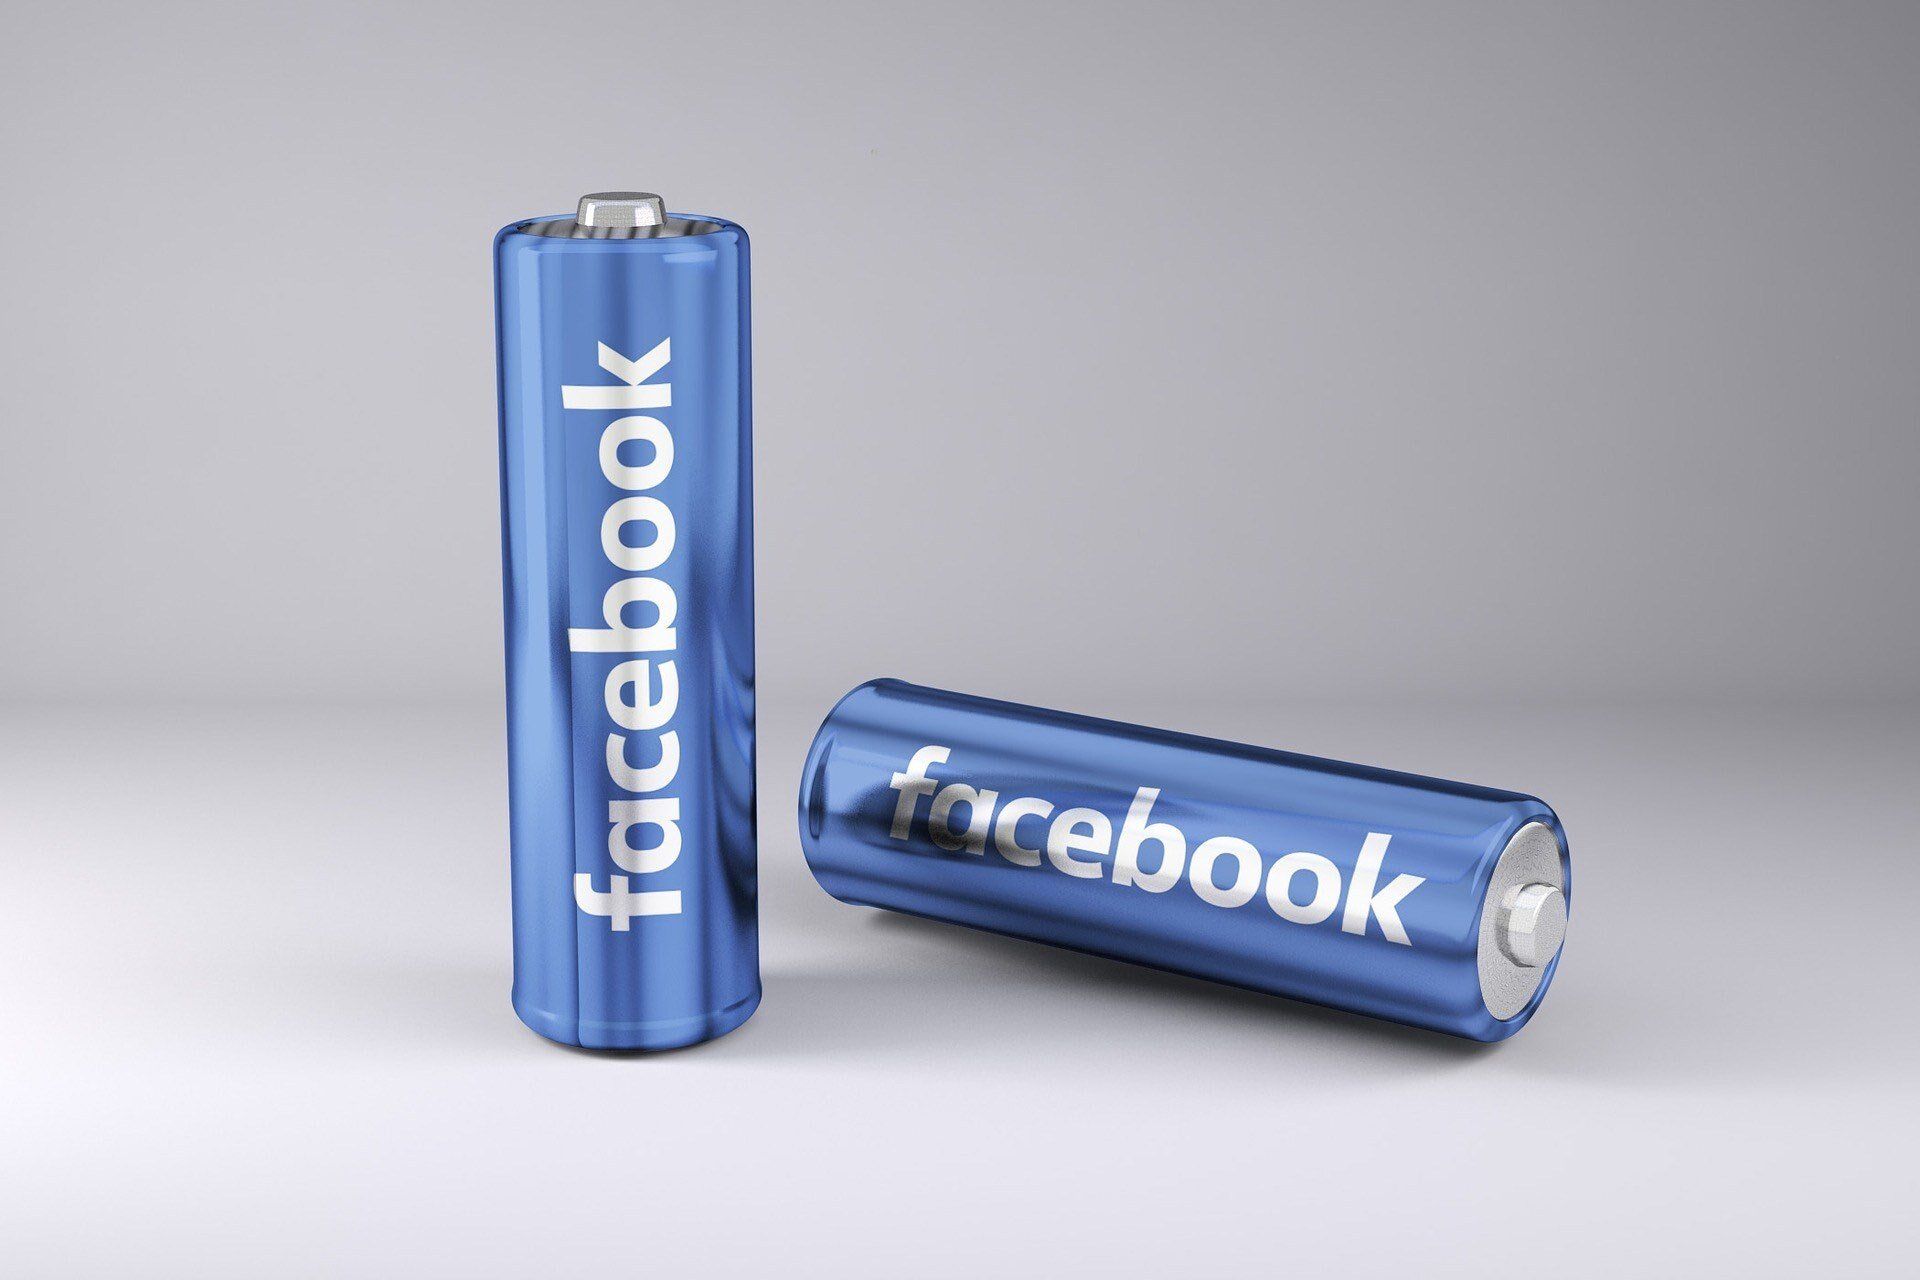 Facebook branded batteries